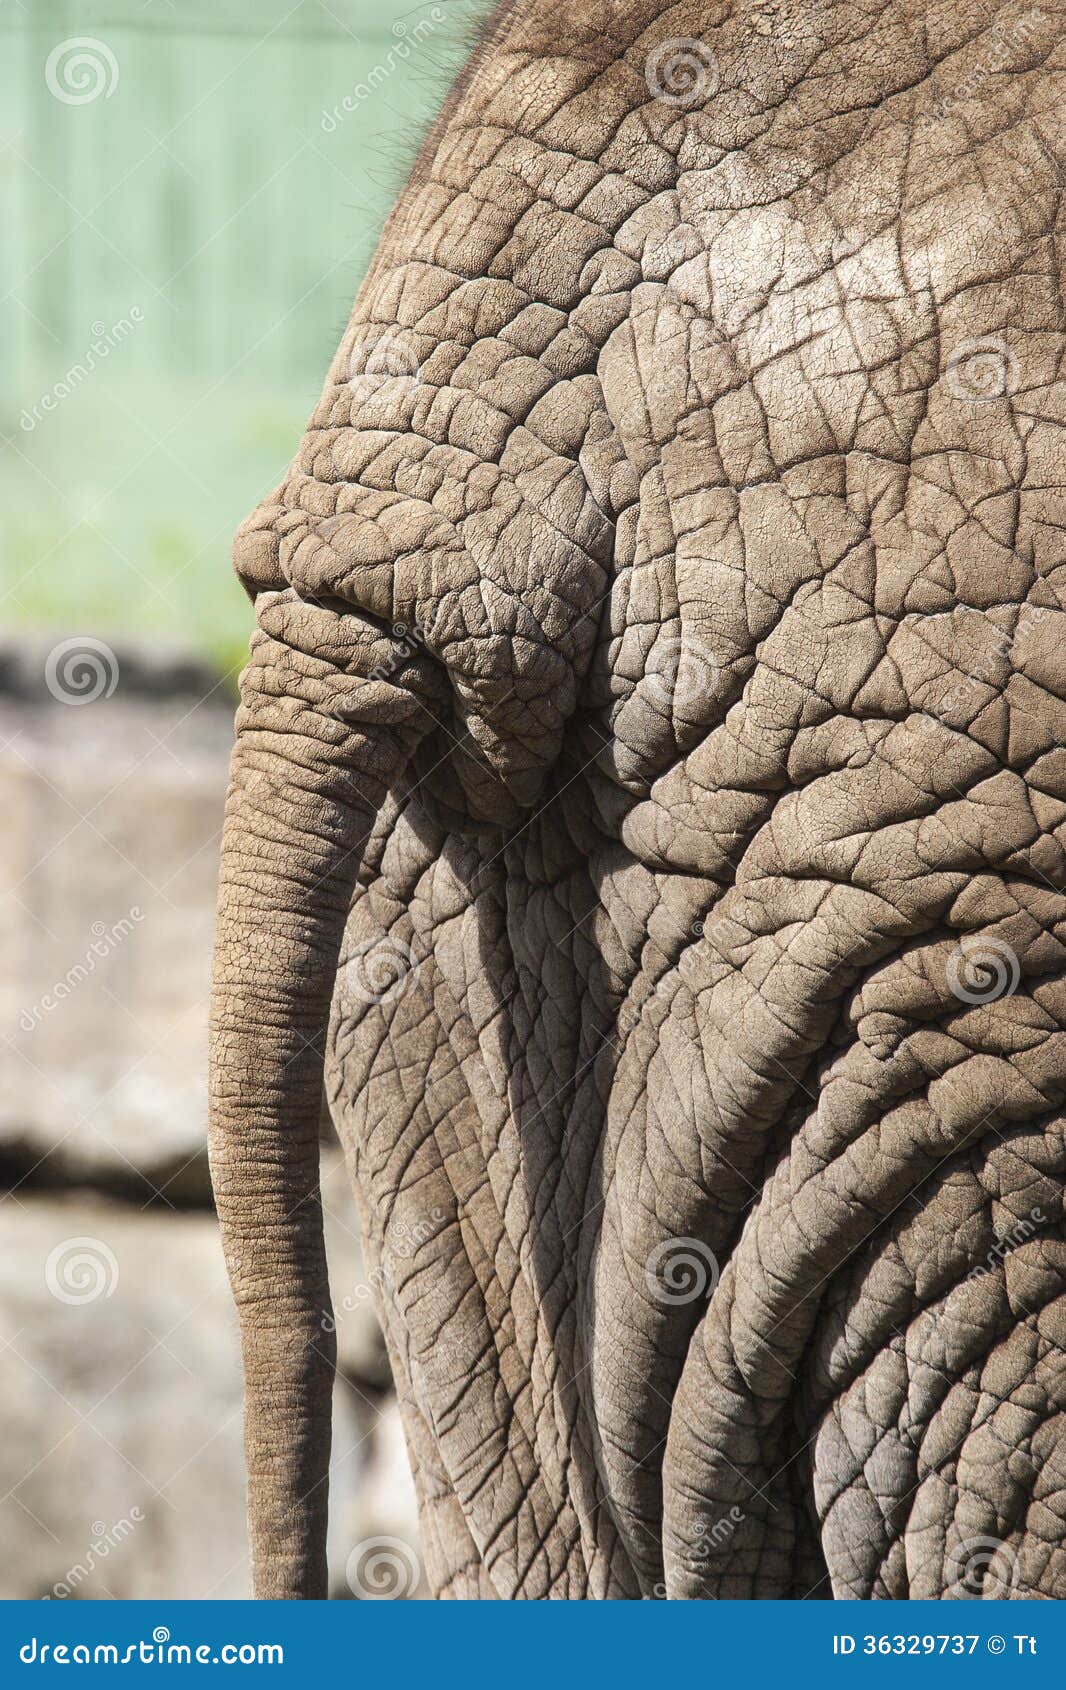 elephant tail clipart - photo #46